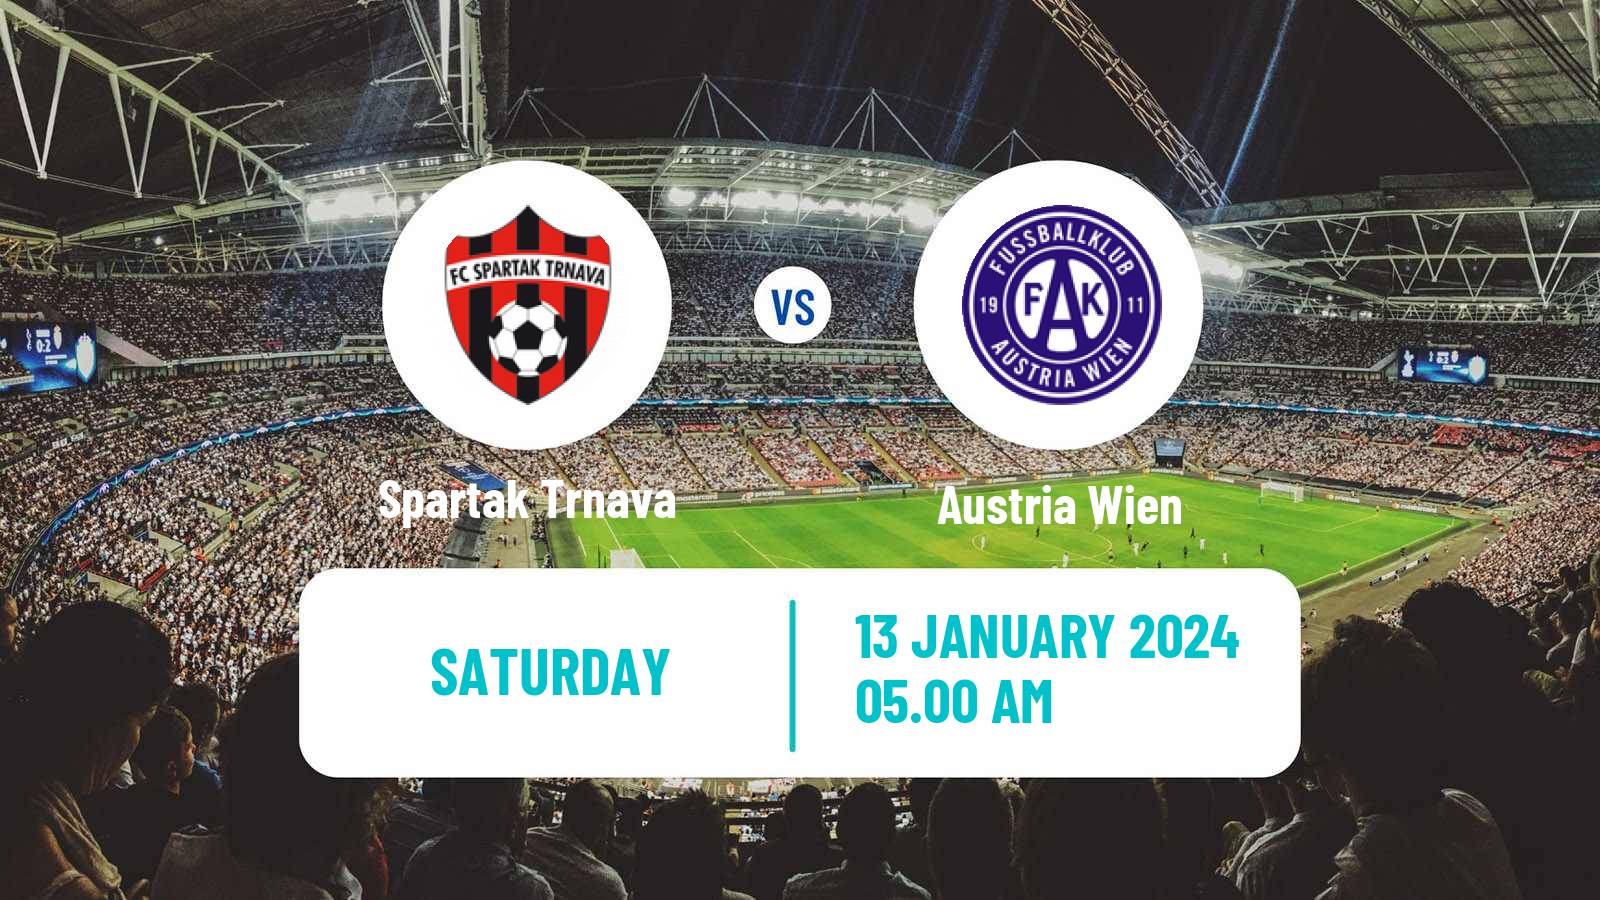 Soccer Tipsport Malta Cup Spartak Trnava - Austria Wien